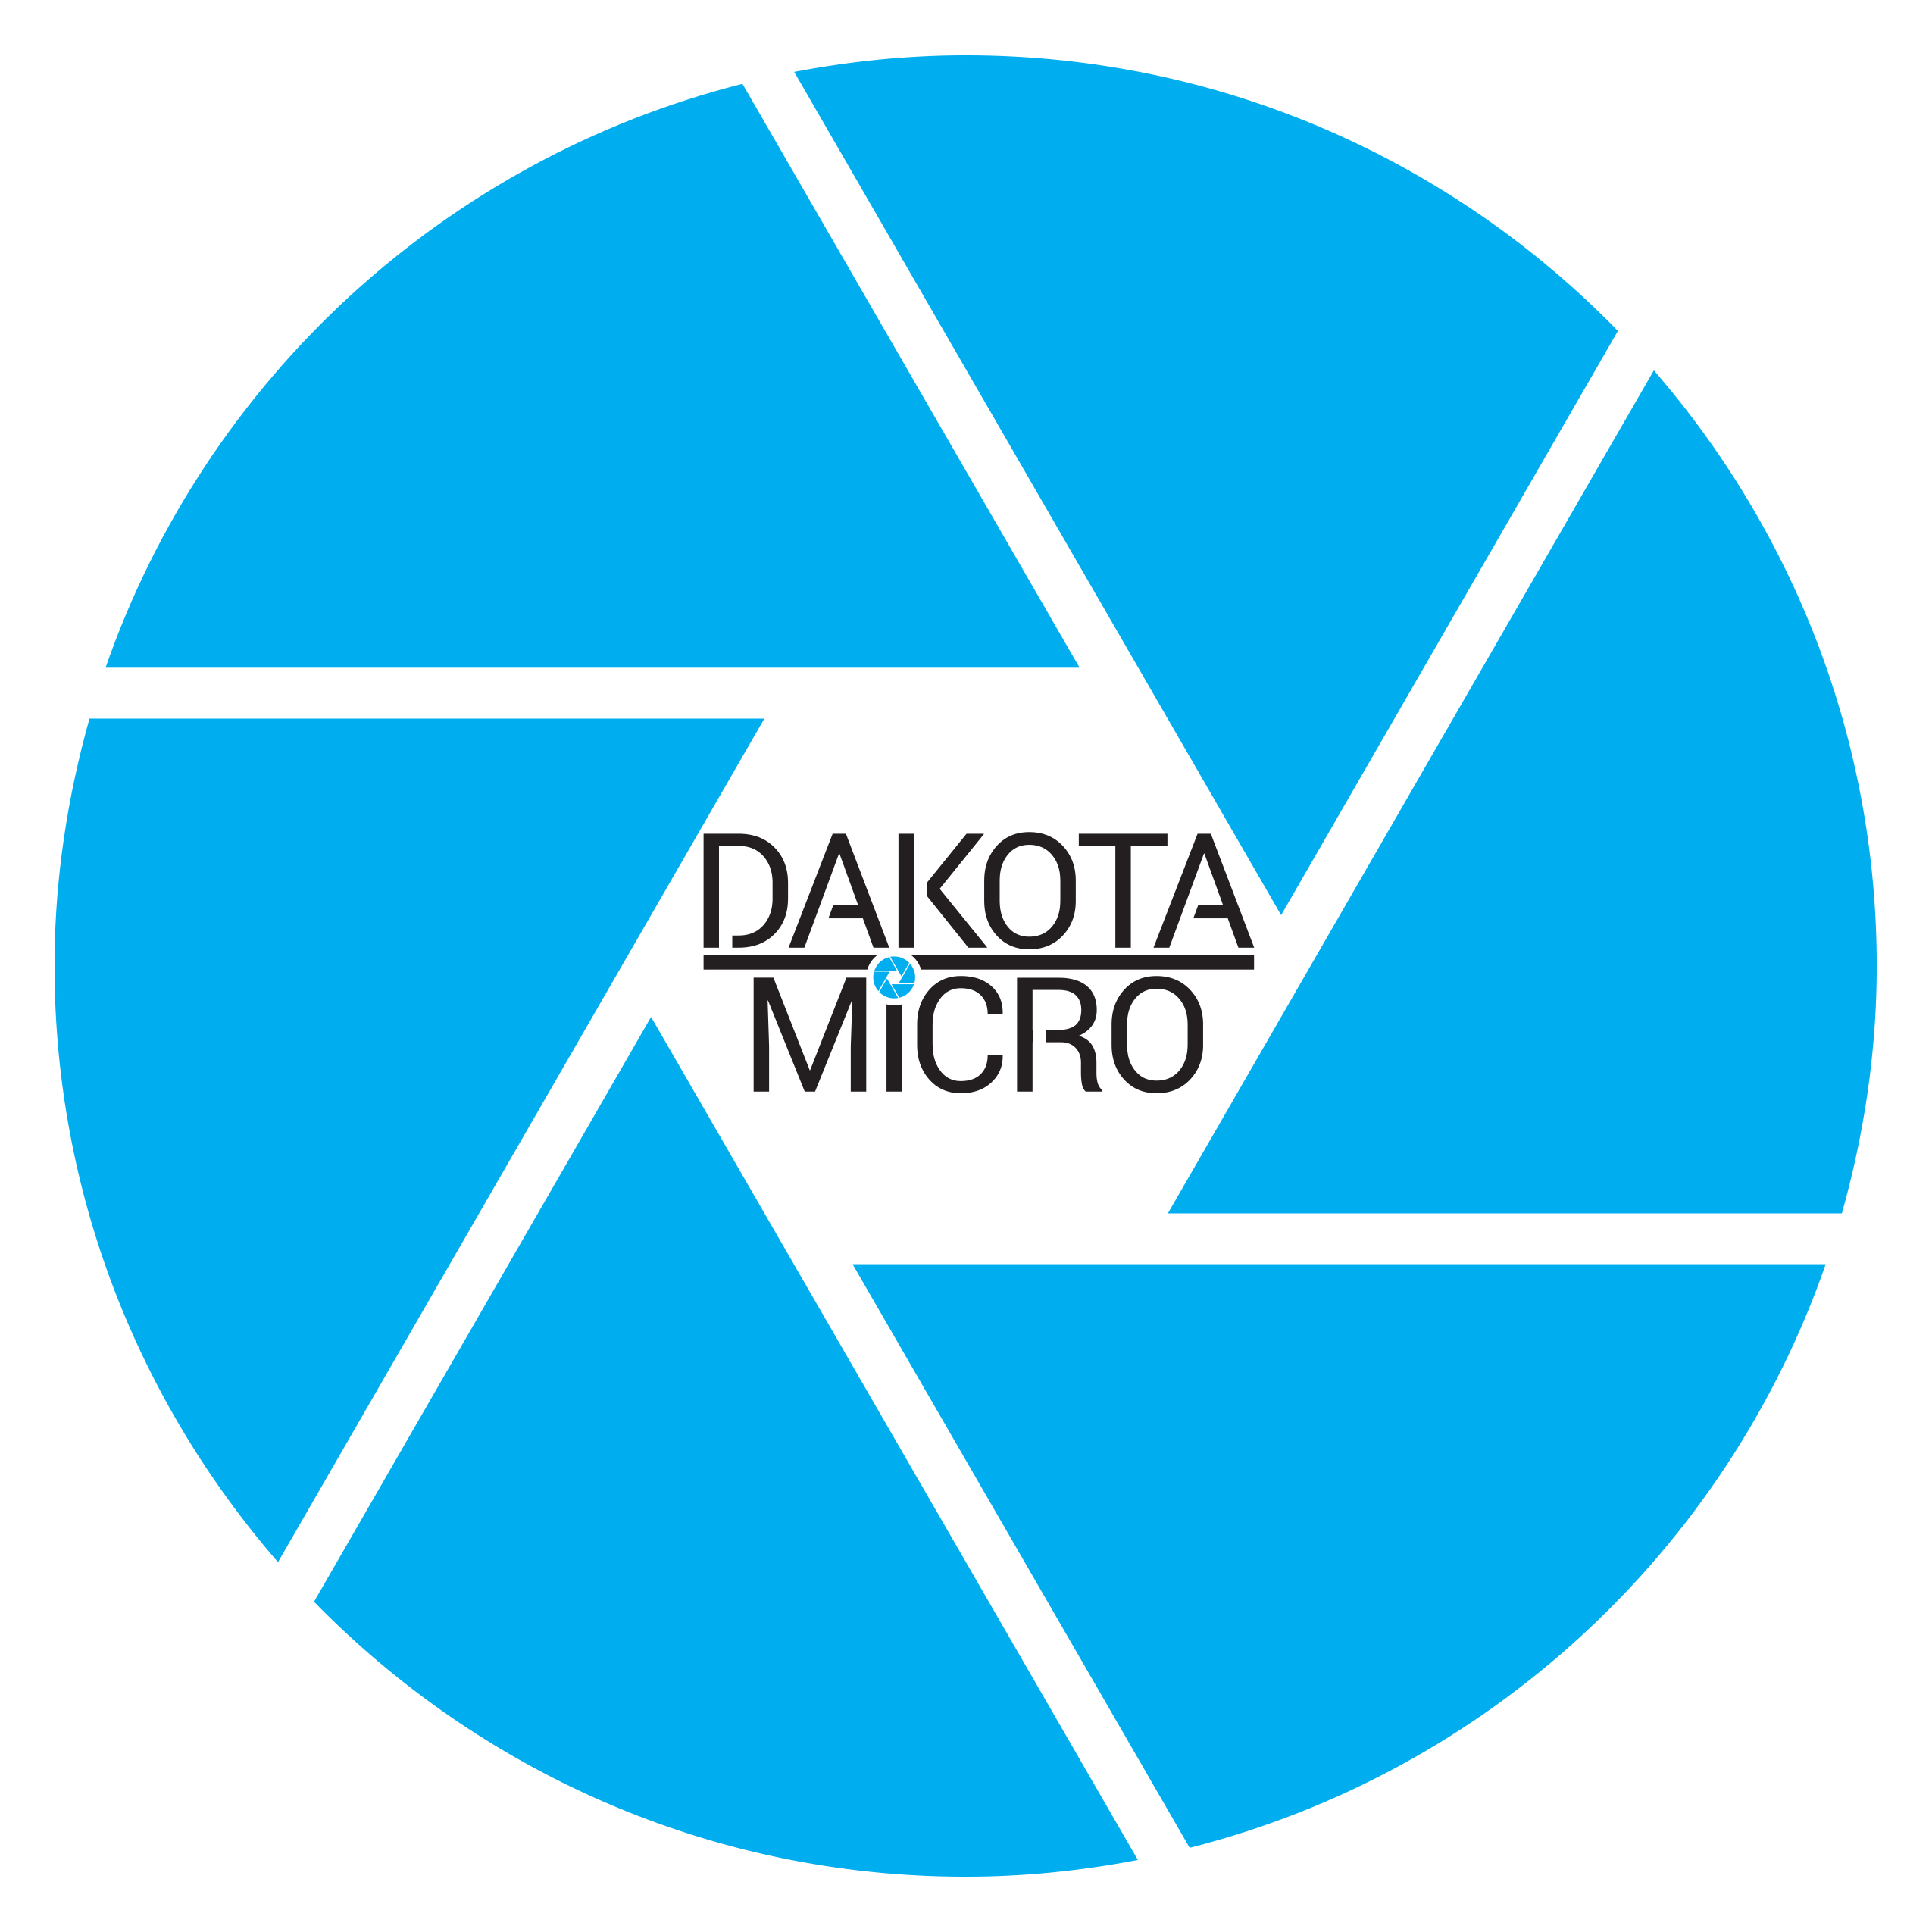 Dakota Micro